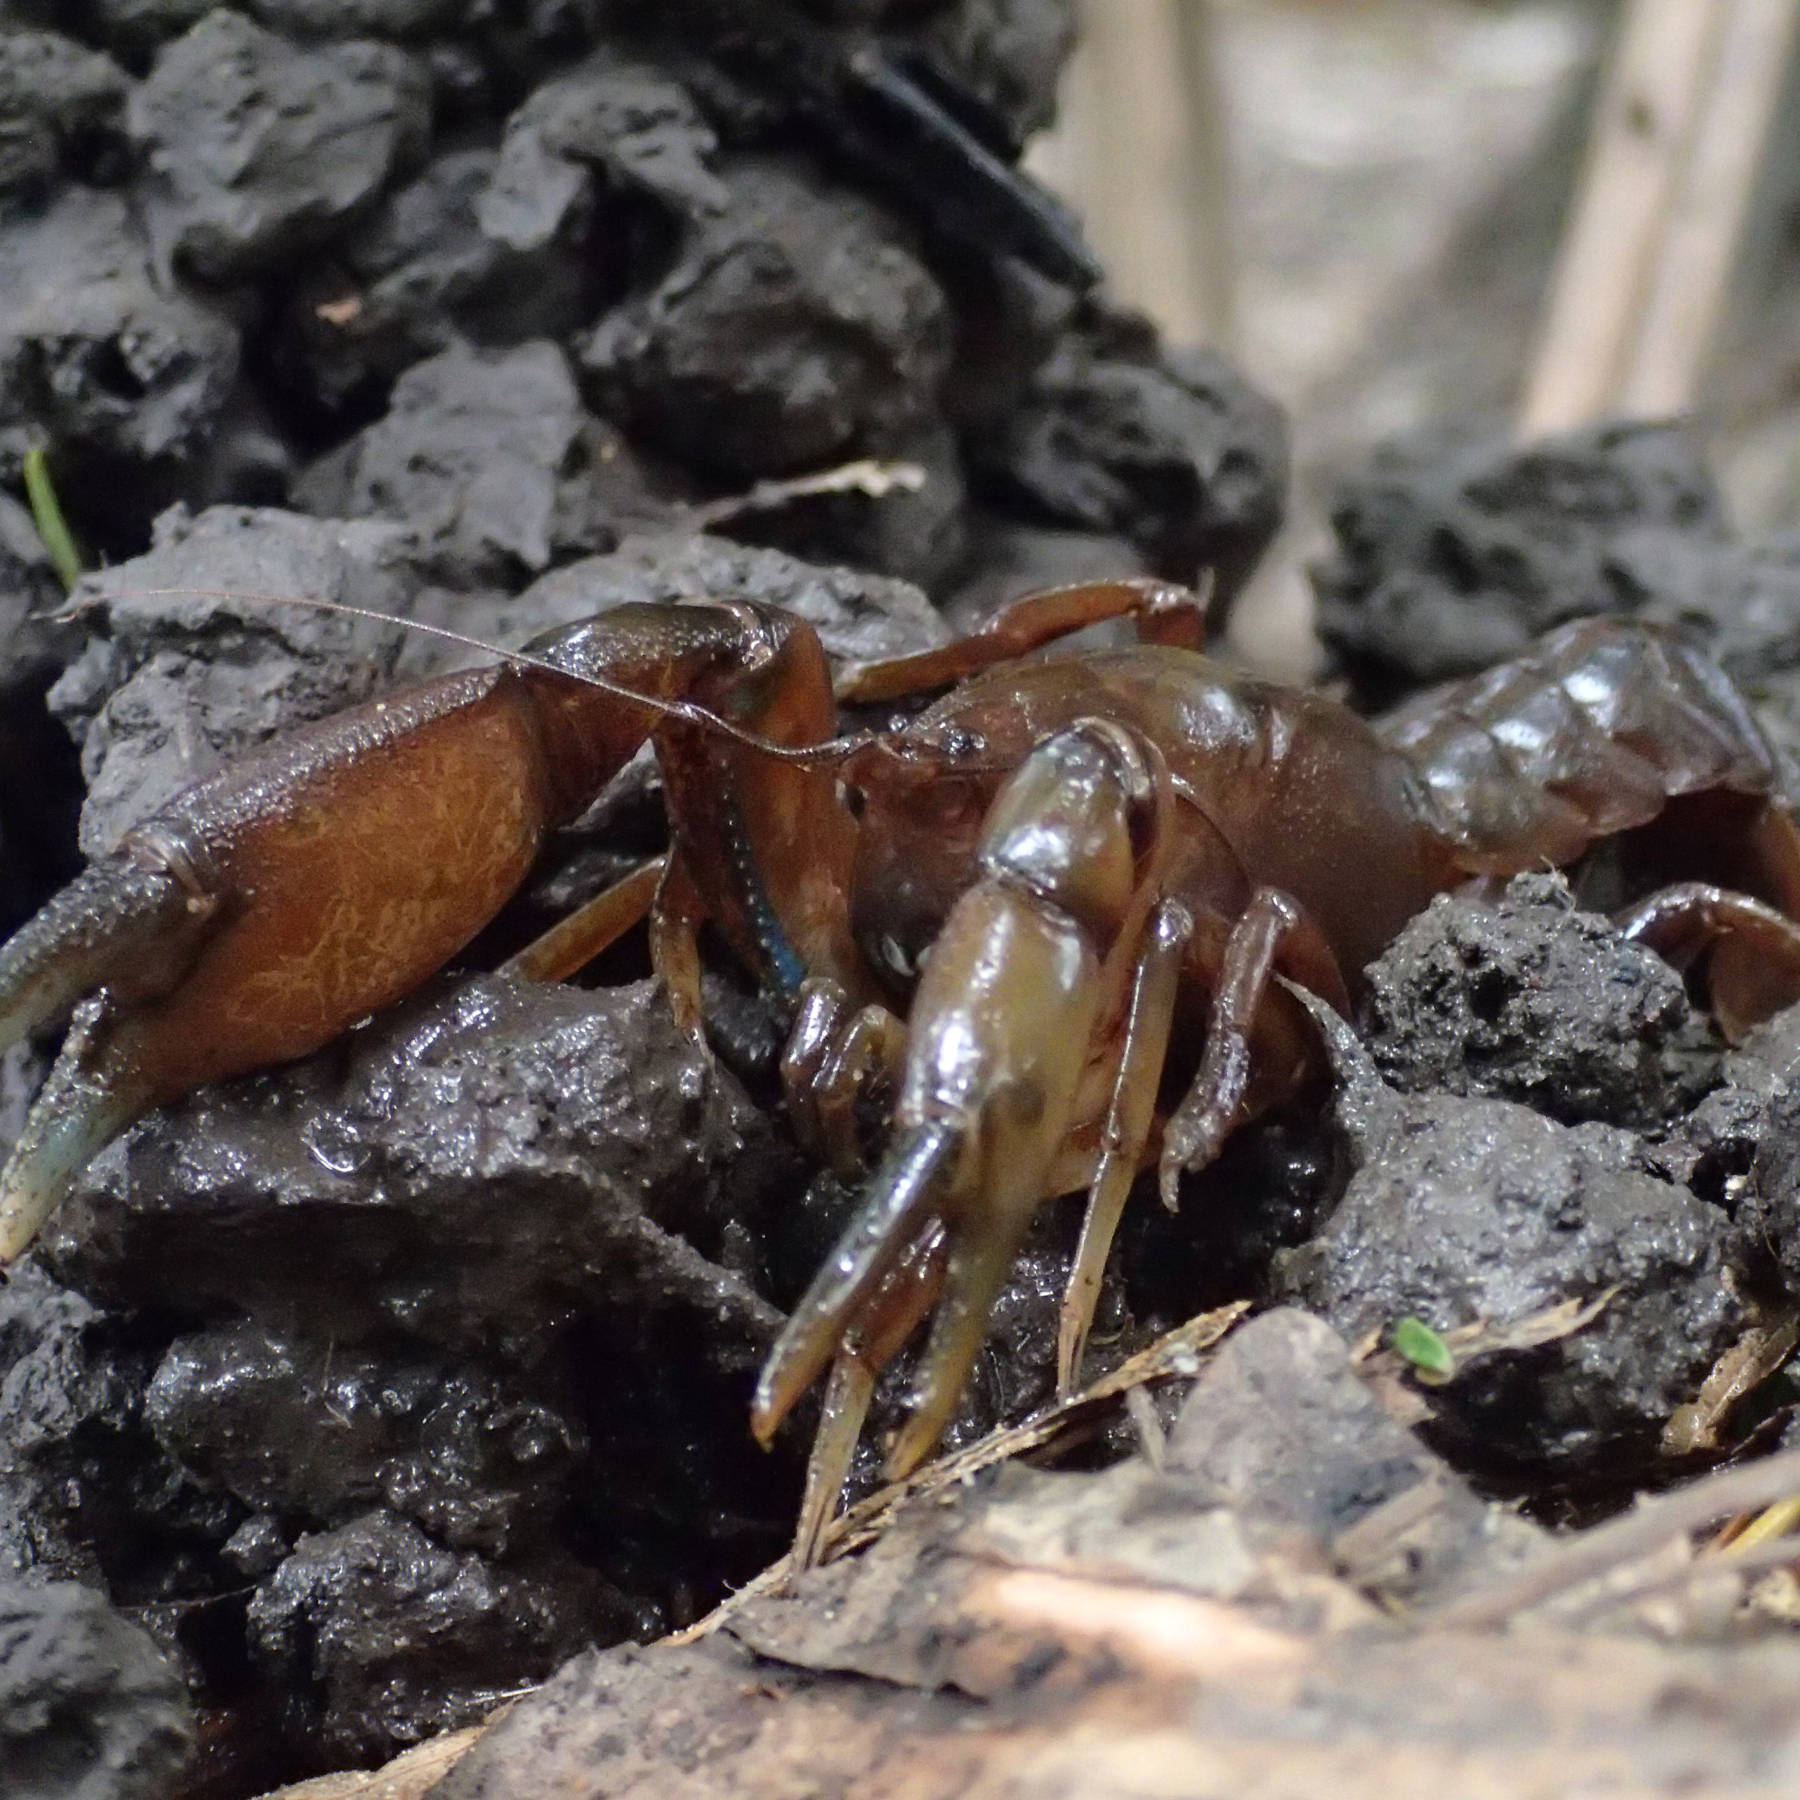 Engaeus granulatus (burrowing crayfish). Photo: Clare Hawkins.